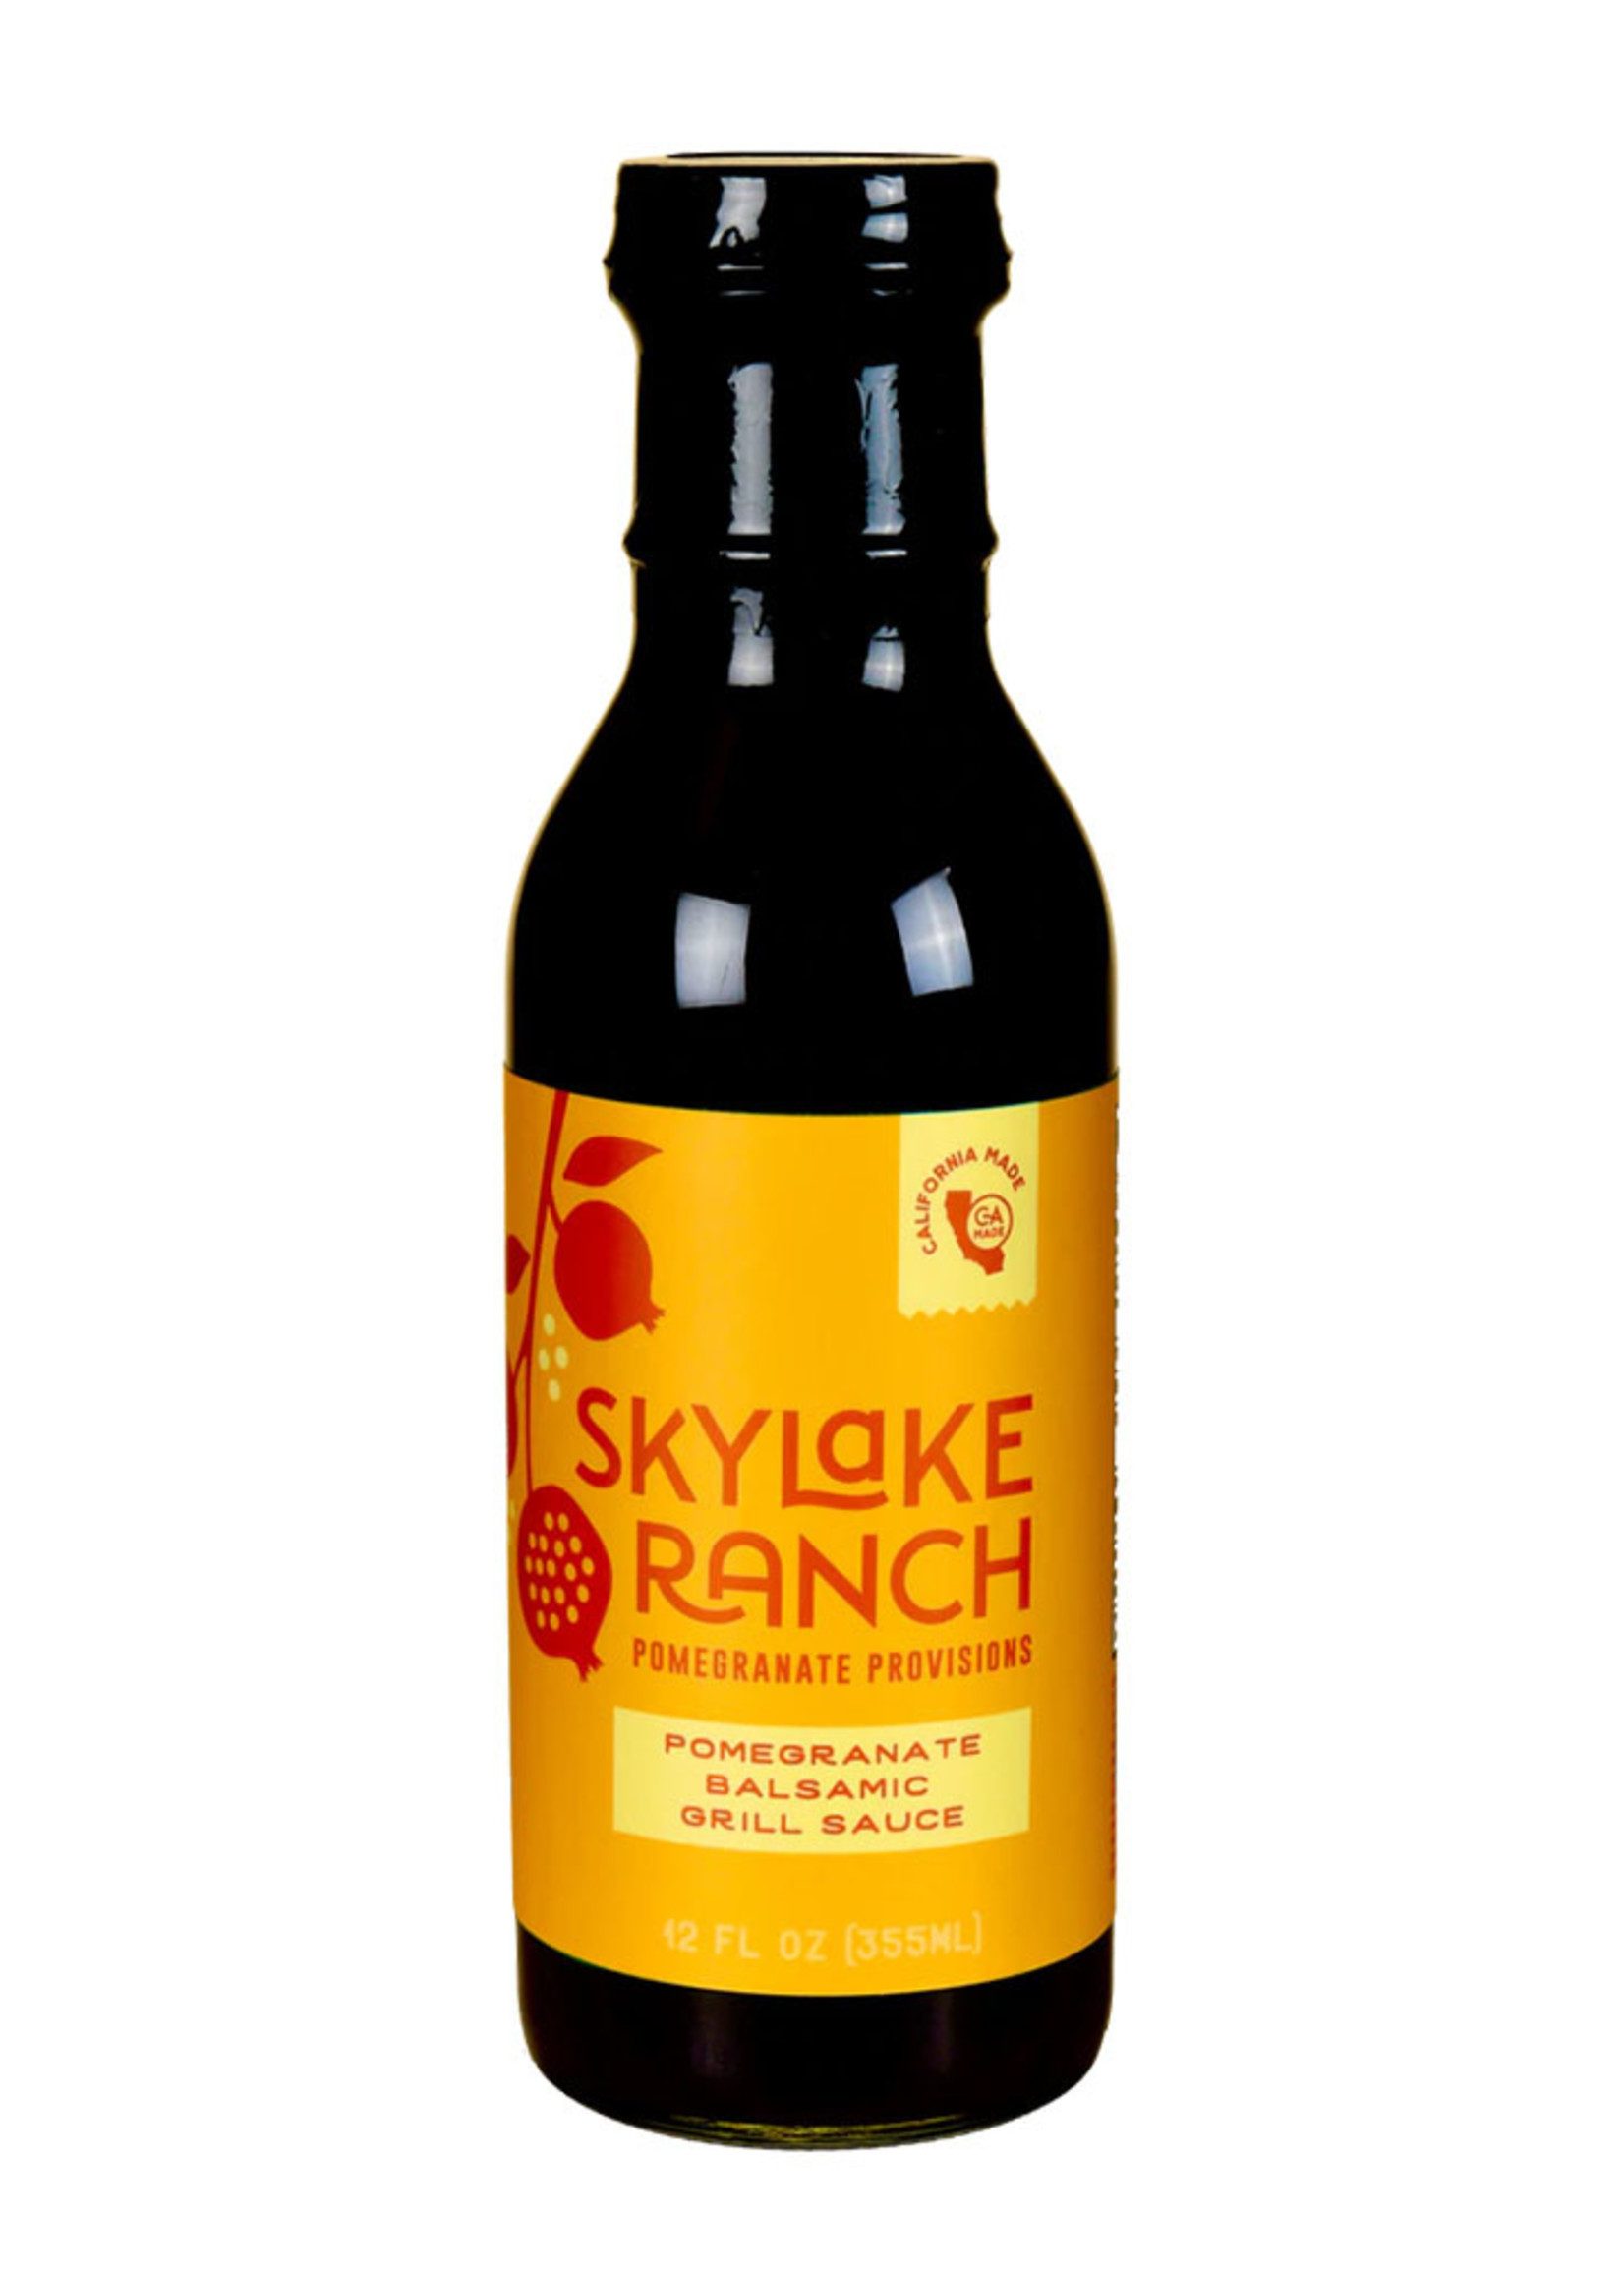 Skylake Ranch Skylake Ranch Pomegranate Provisions Pomegranate Balsamic Grill Sauce  12oz